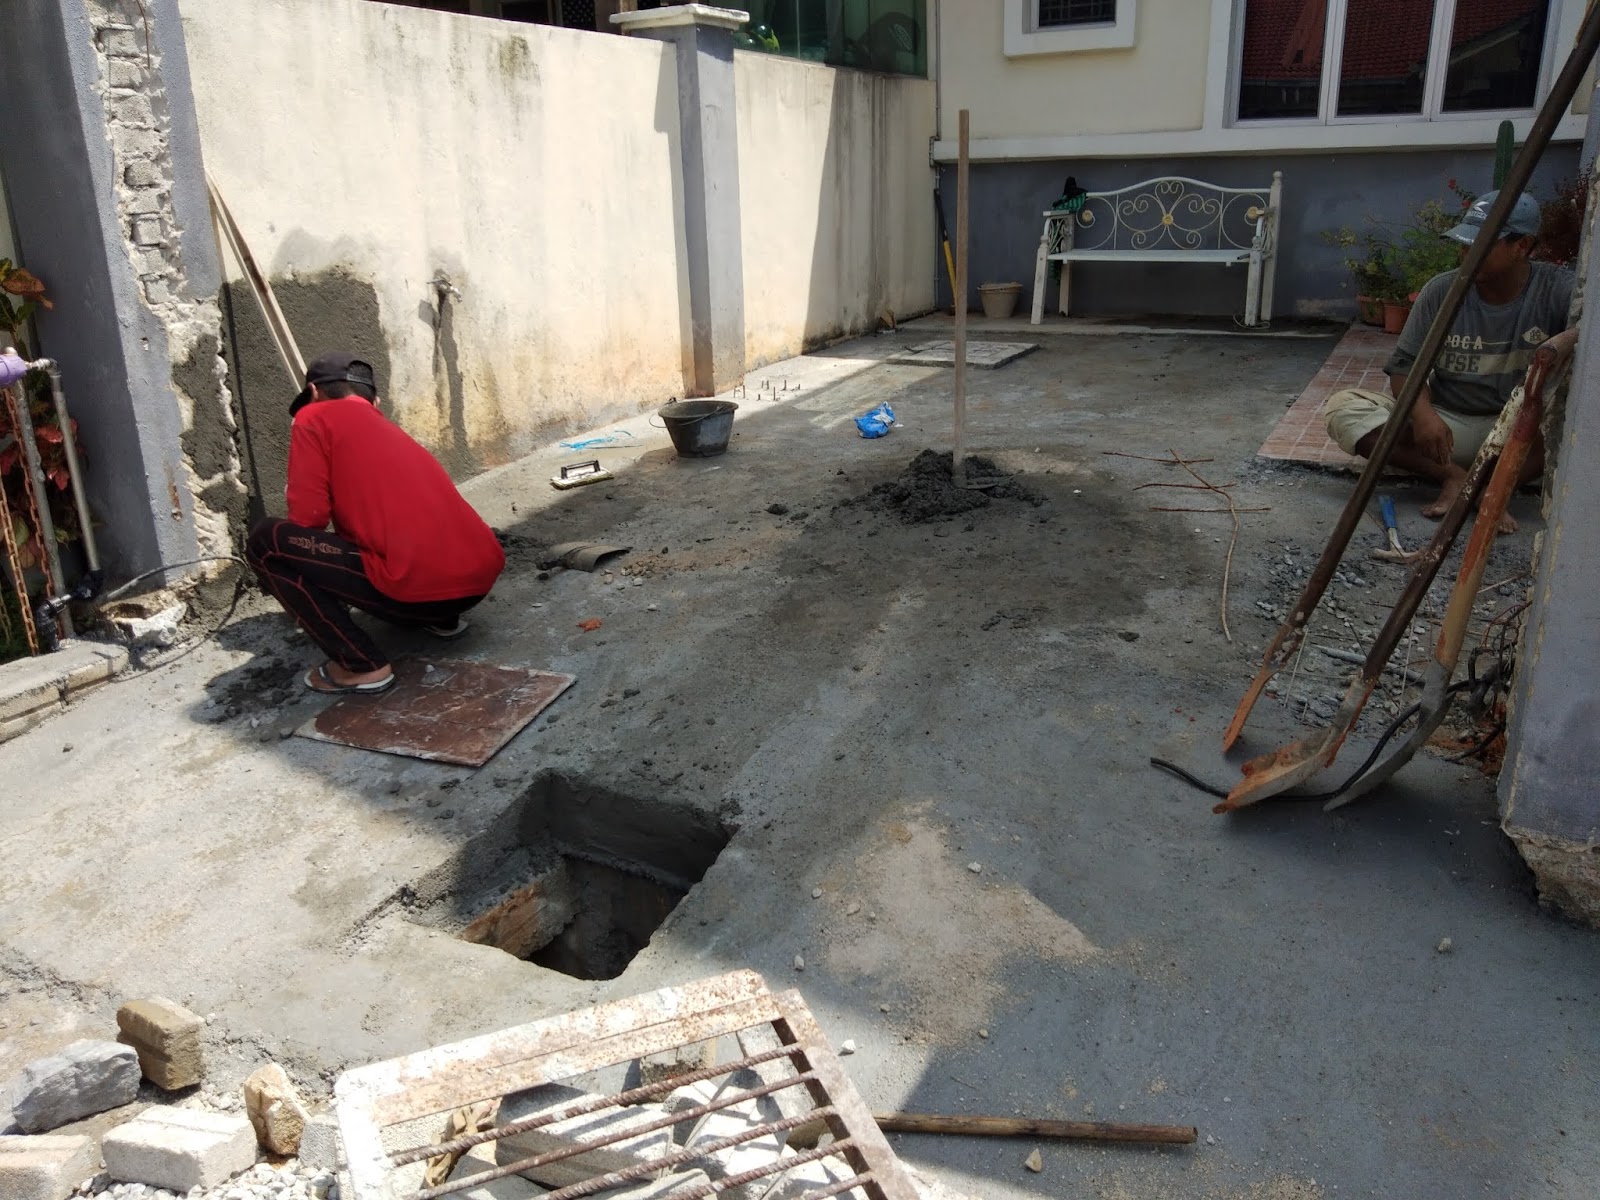 AWNING PAGOLA DAN GRILL : Nilai - Projek Tile Dan Bumbung ...